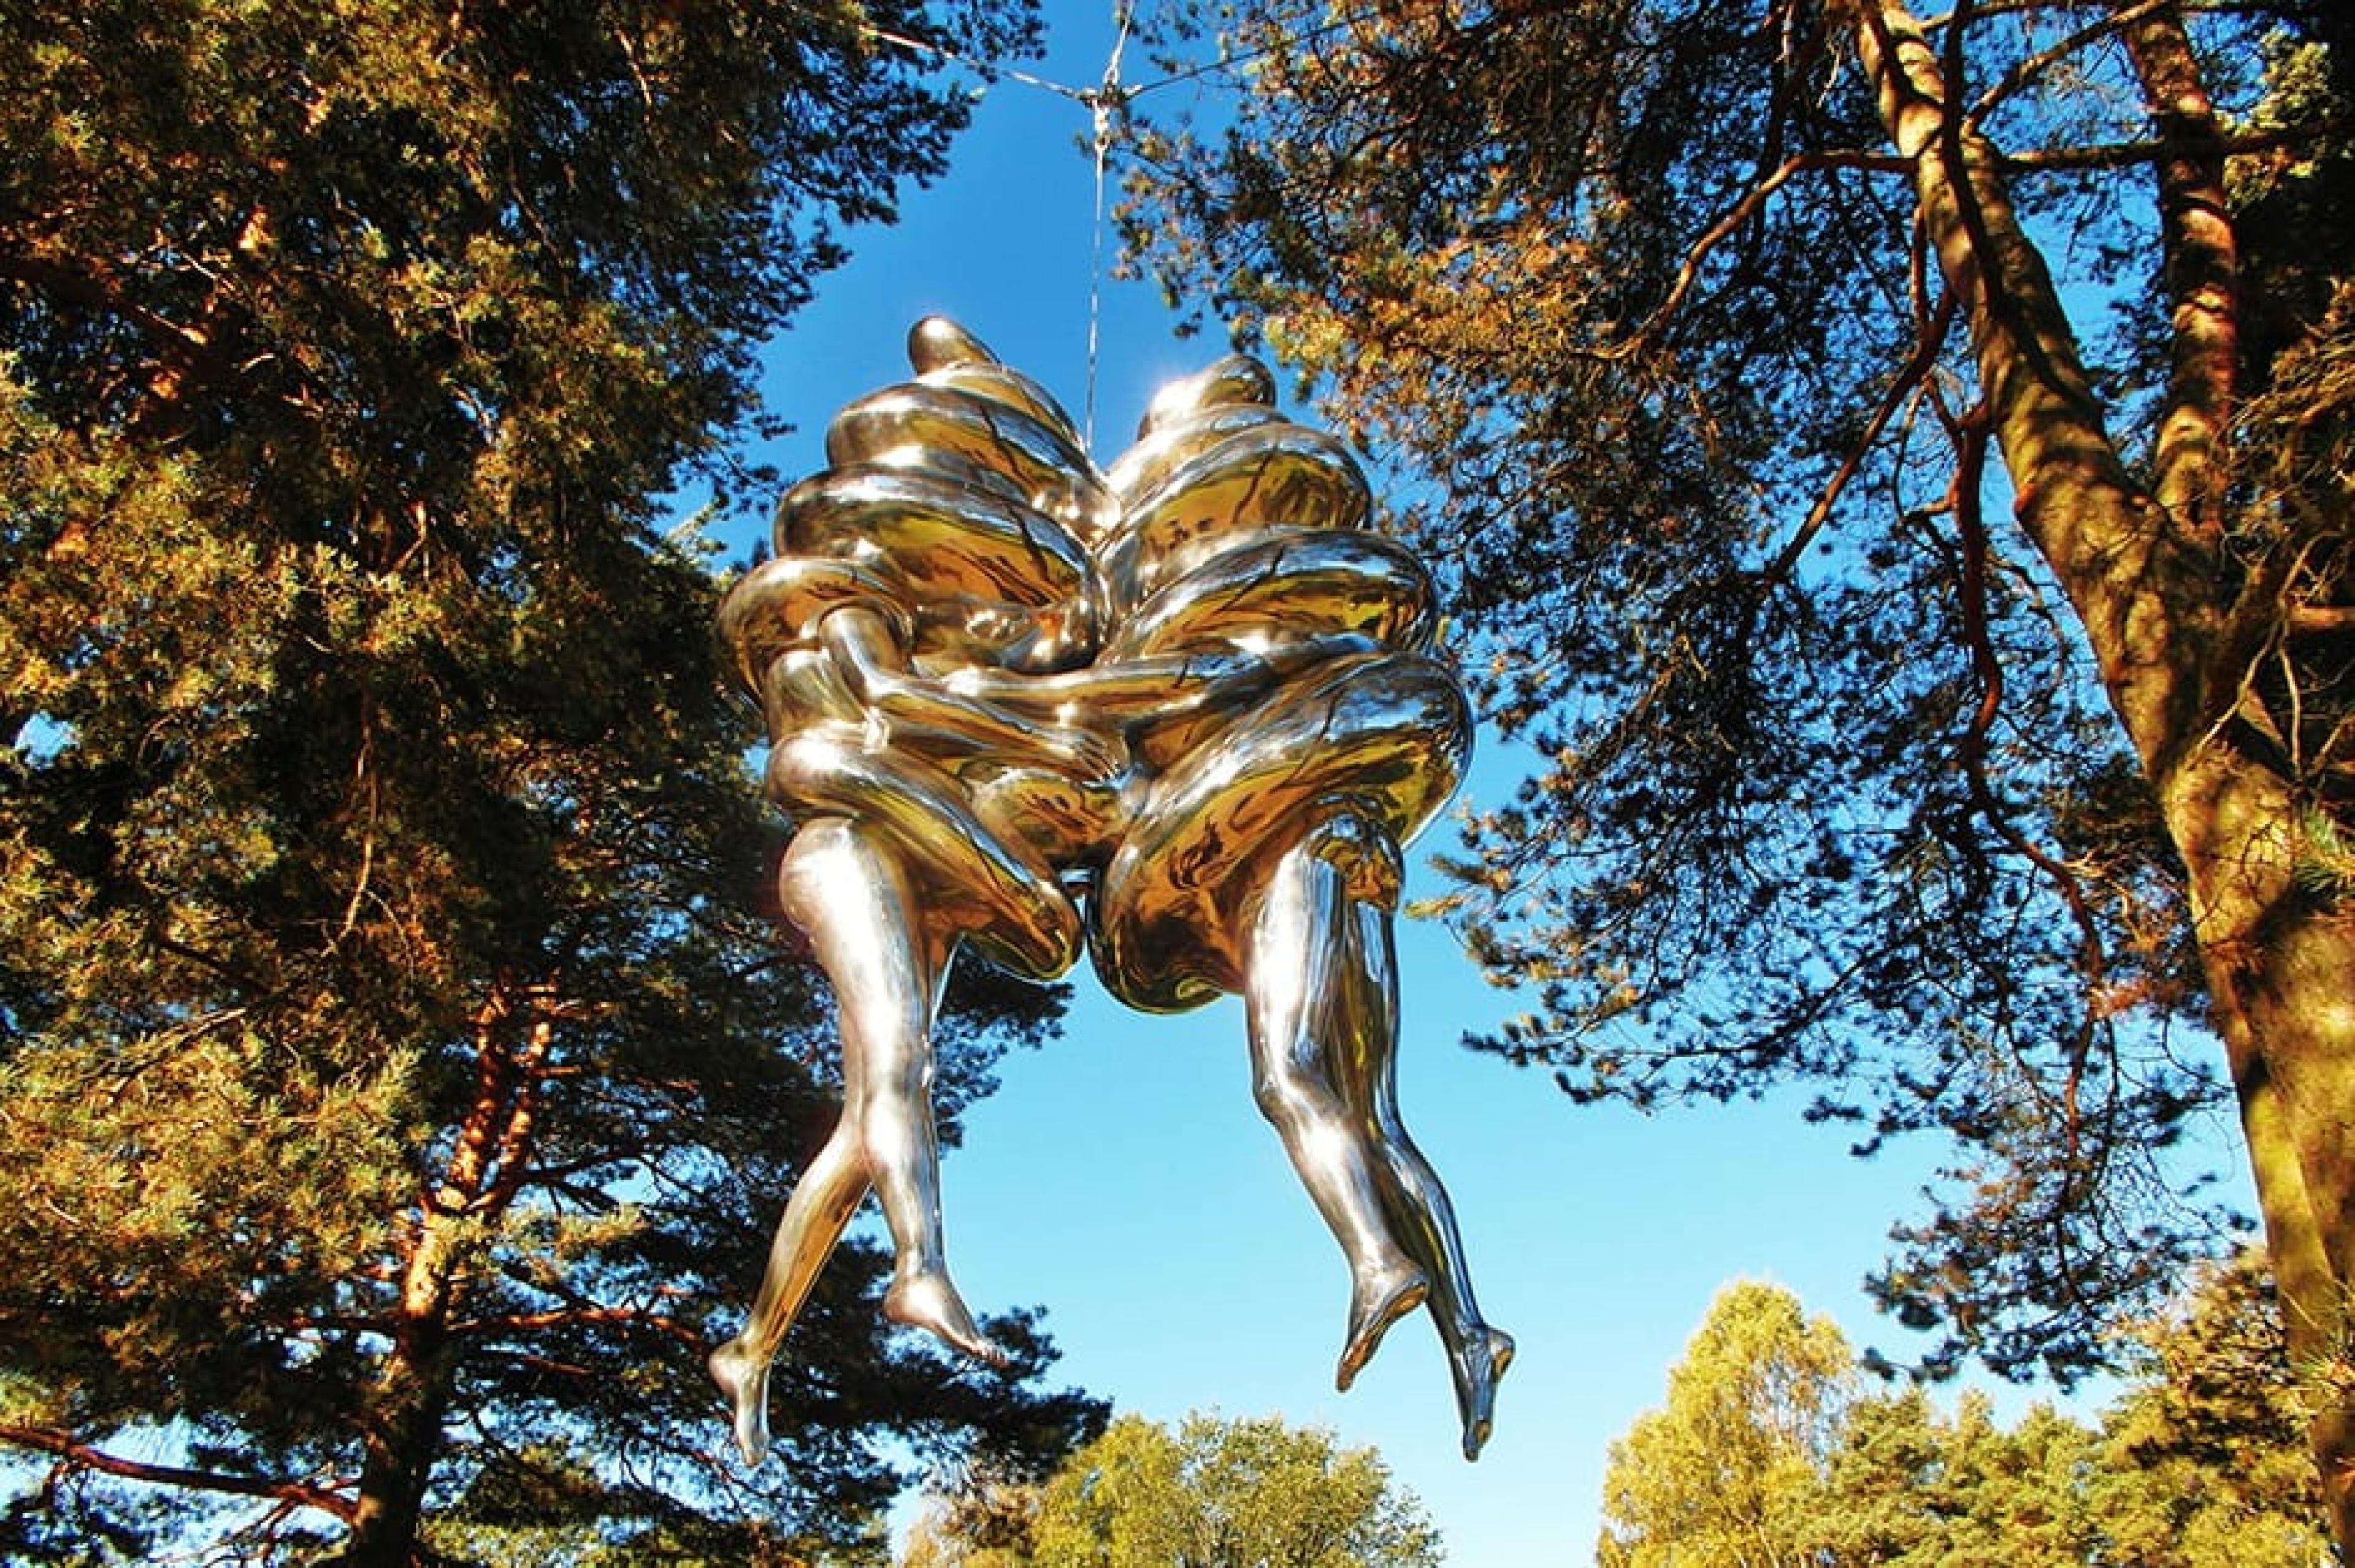 Sculpture at Ekebergparken Sculpture Park,  Oslo, Norway - Courtsey  Ekebergparken Sculpture Park